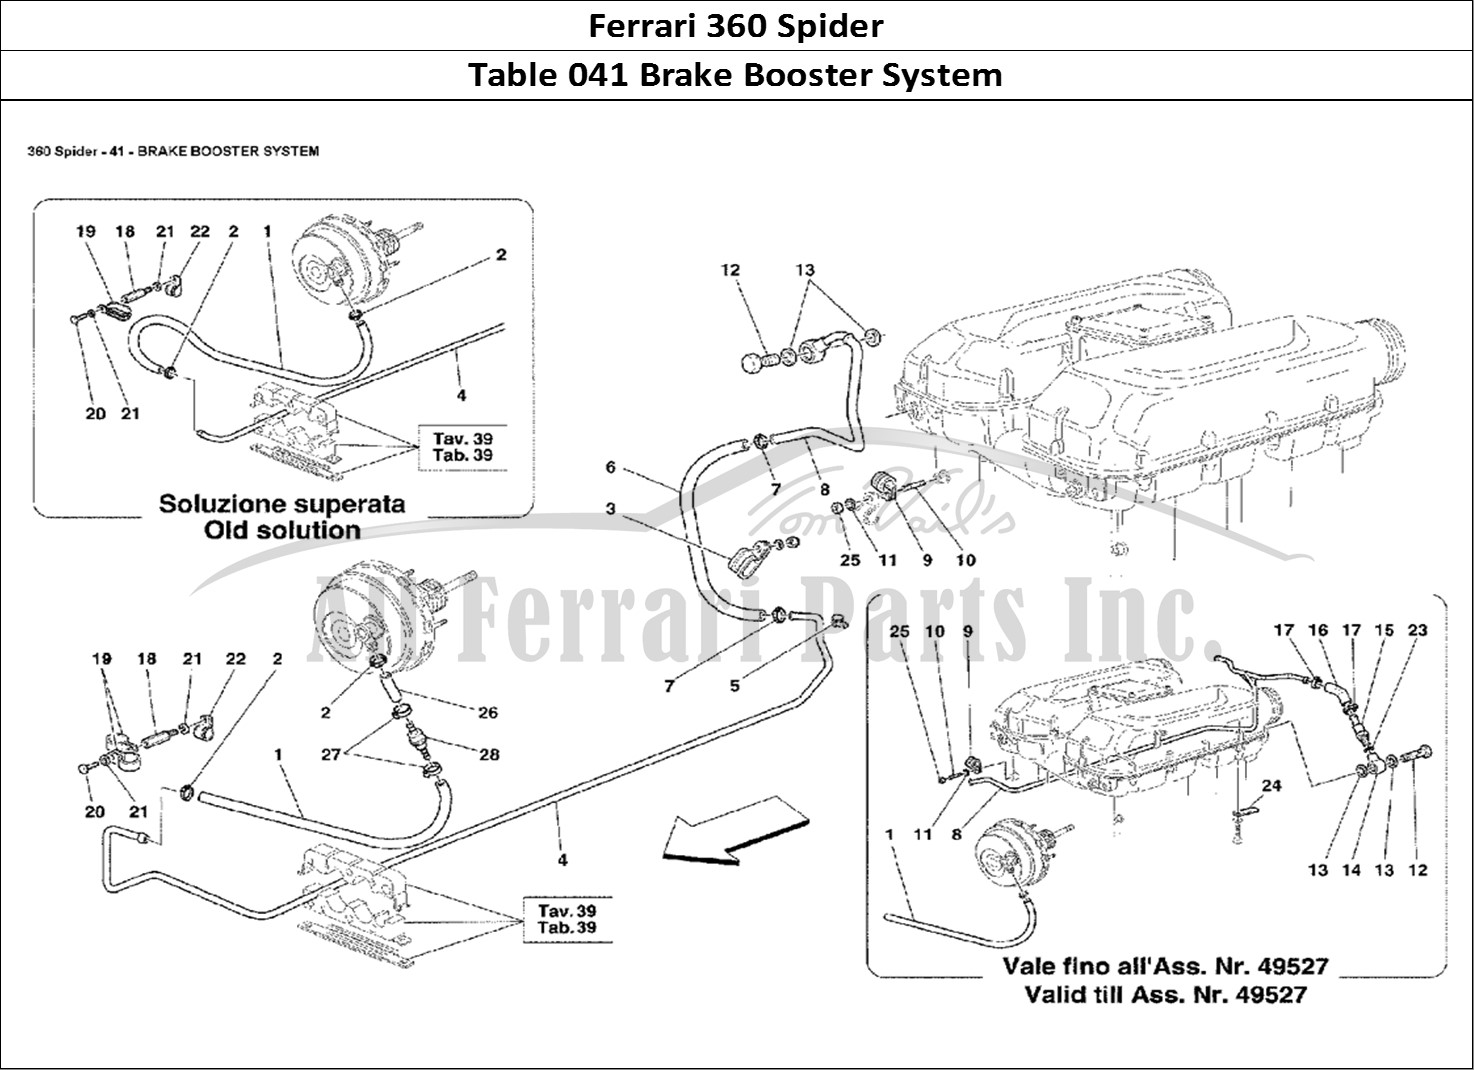 Ferrari Parts Ferrari 360 Spider Page 041 Brake Booster System